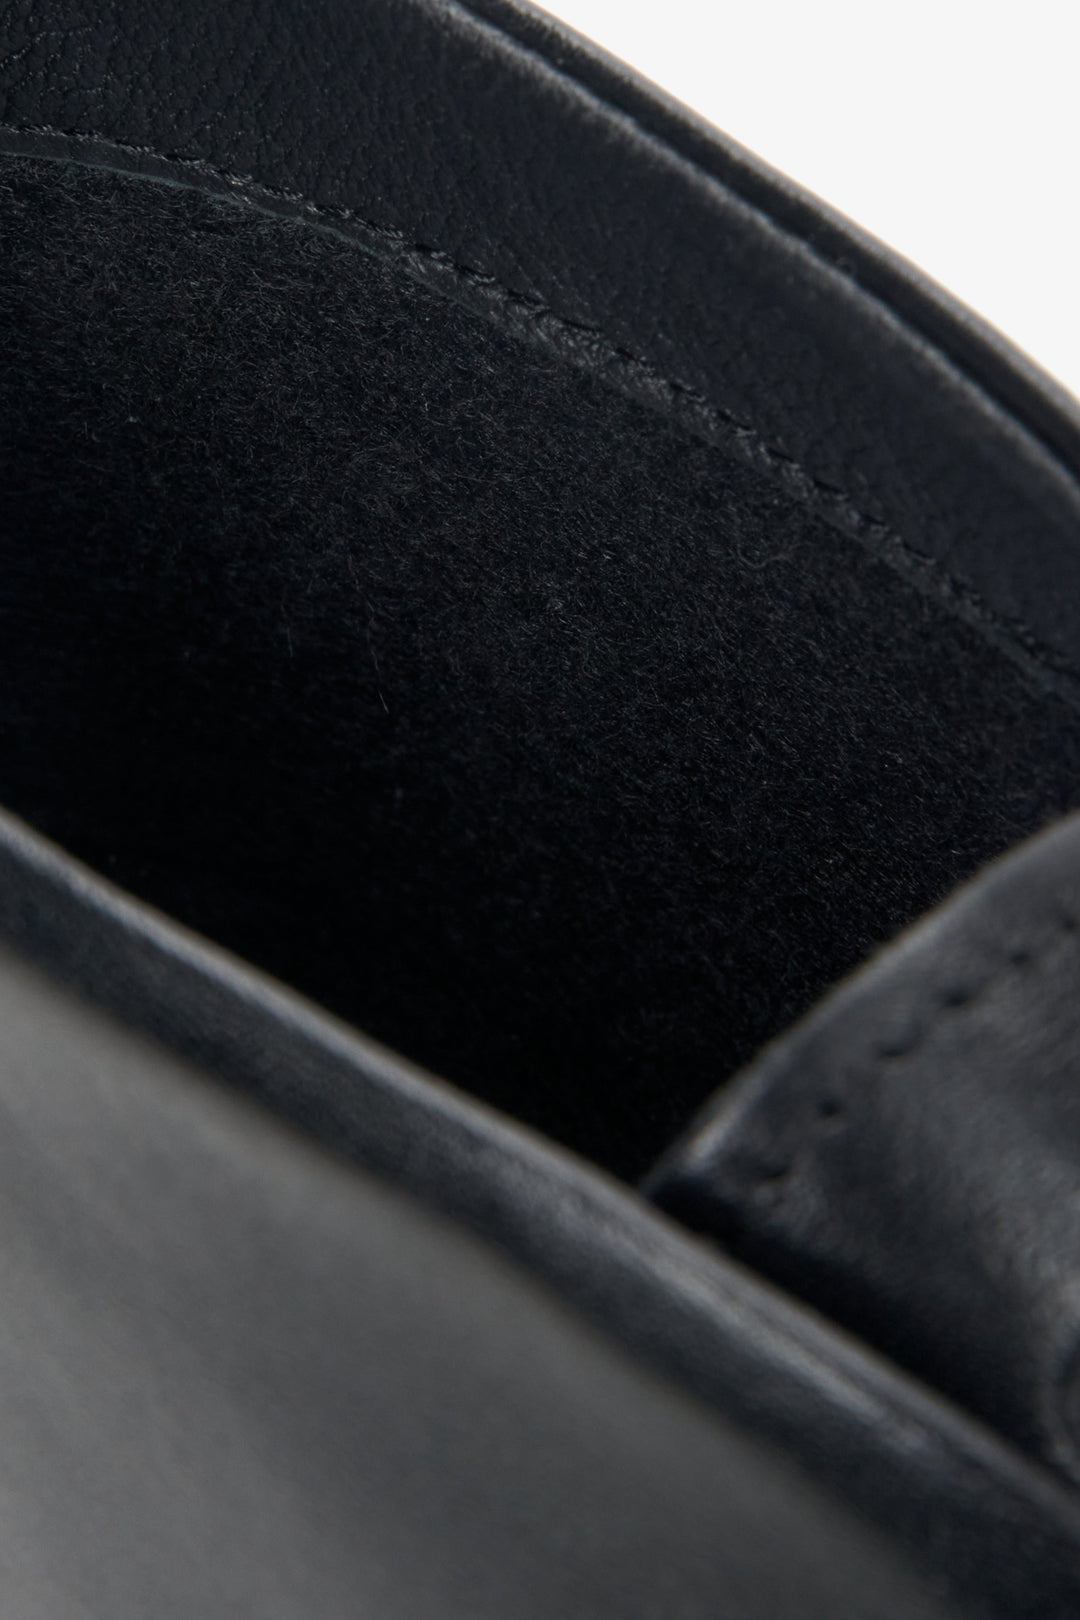 Men's black leather Estro boots - close-up on the detail